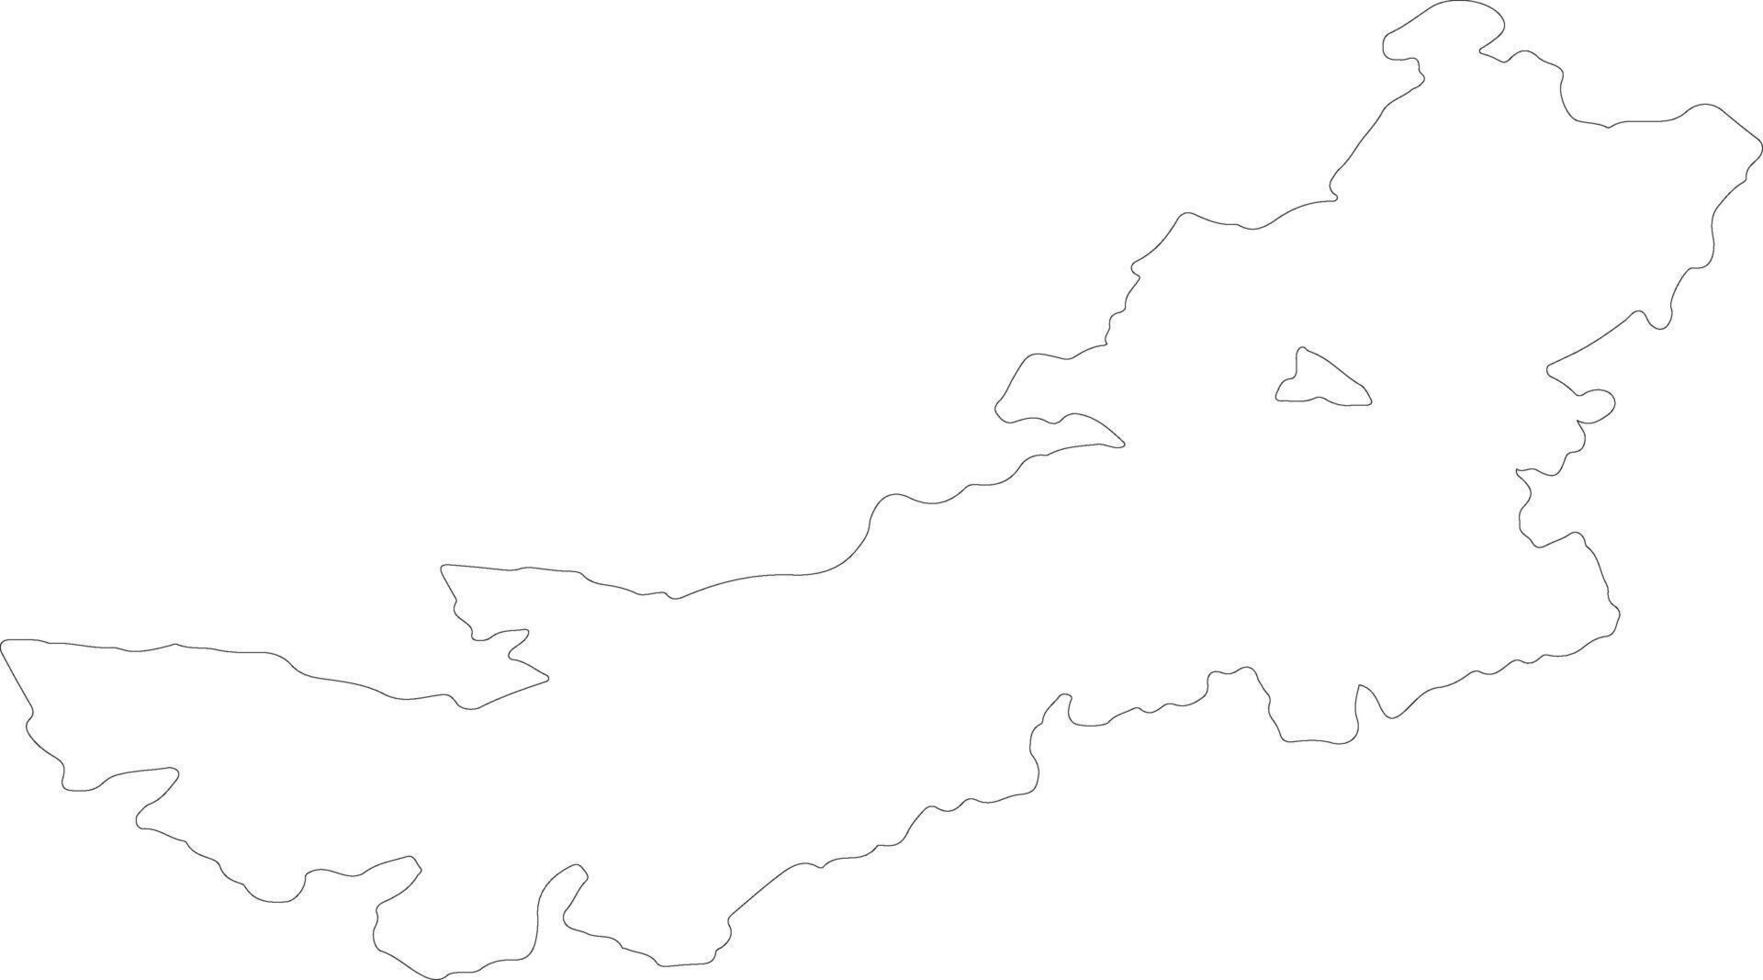 Inner Mongol China outline map vector